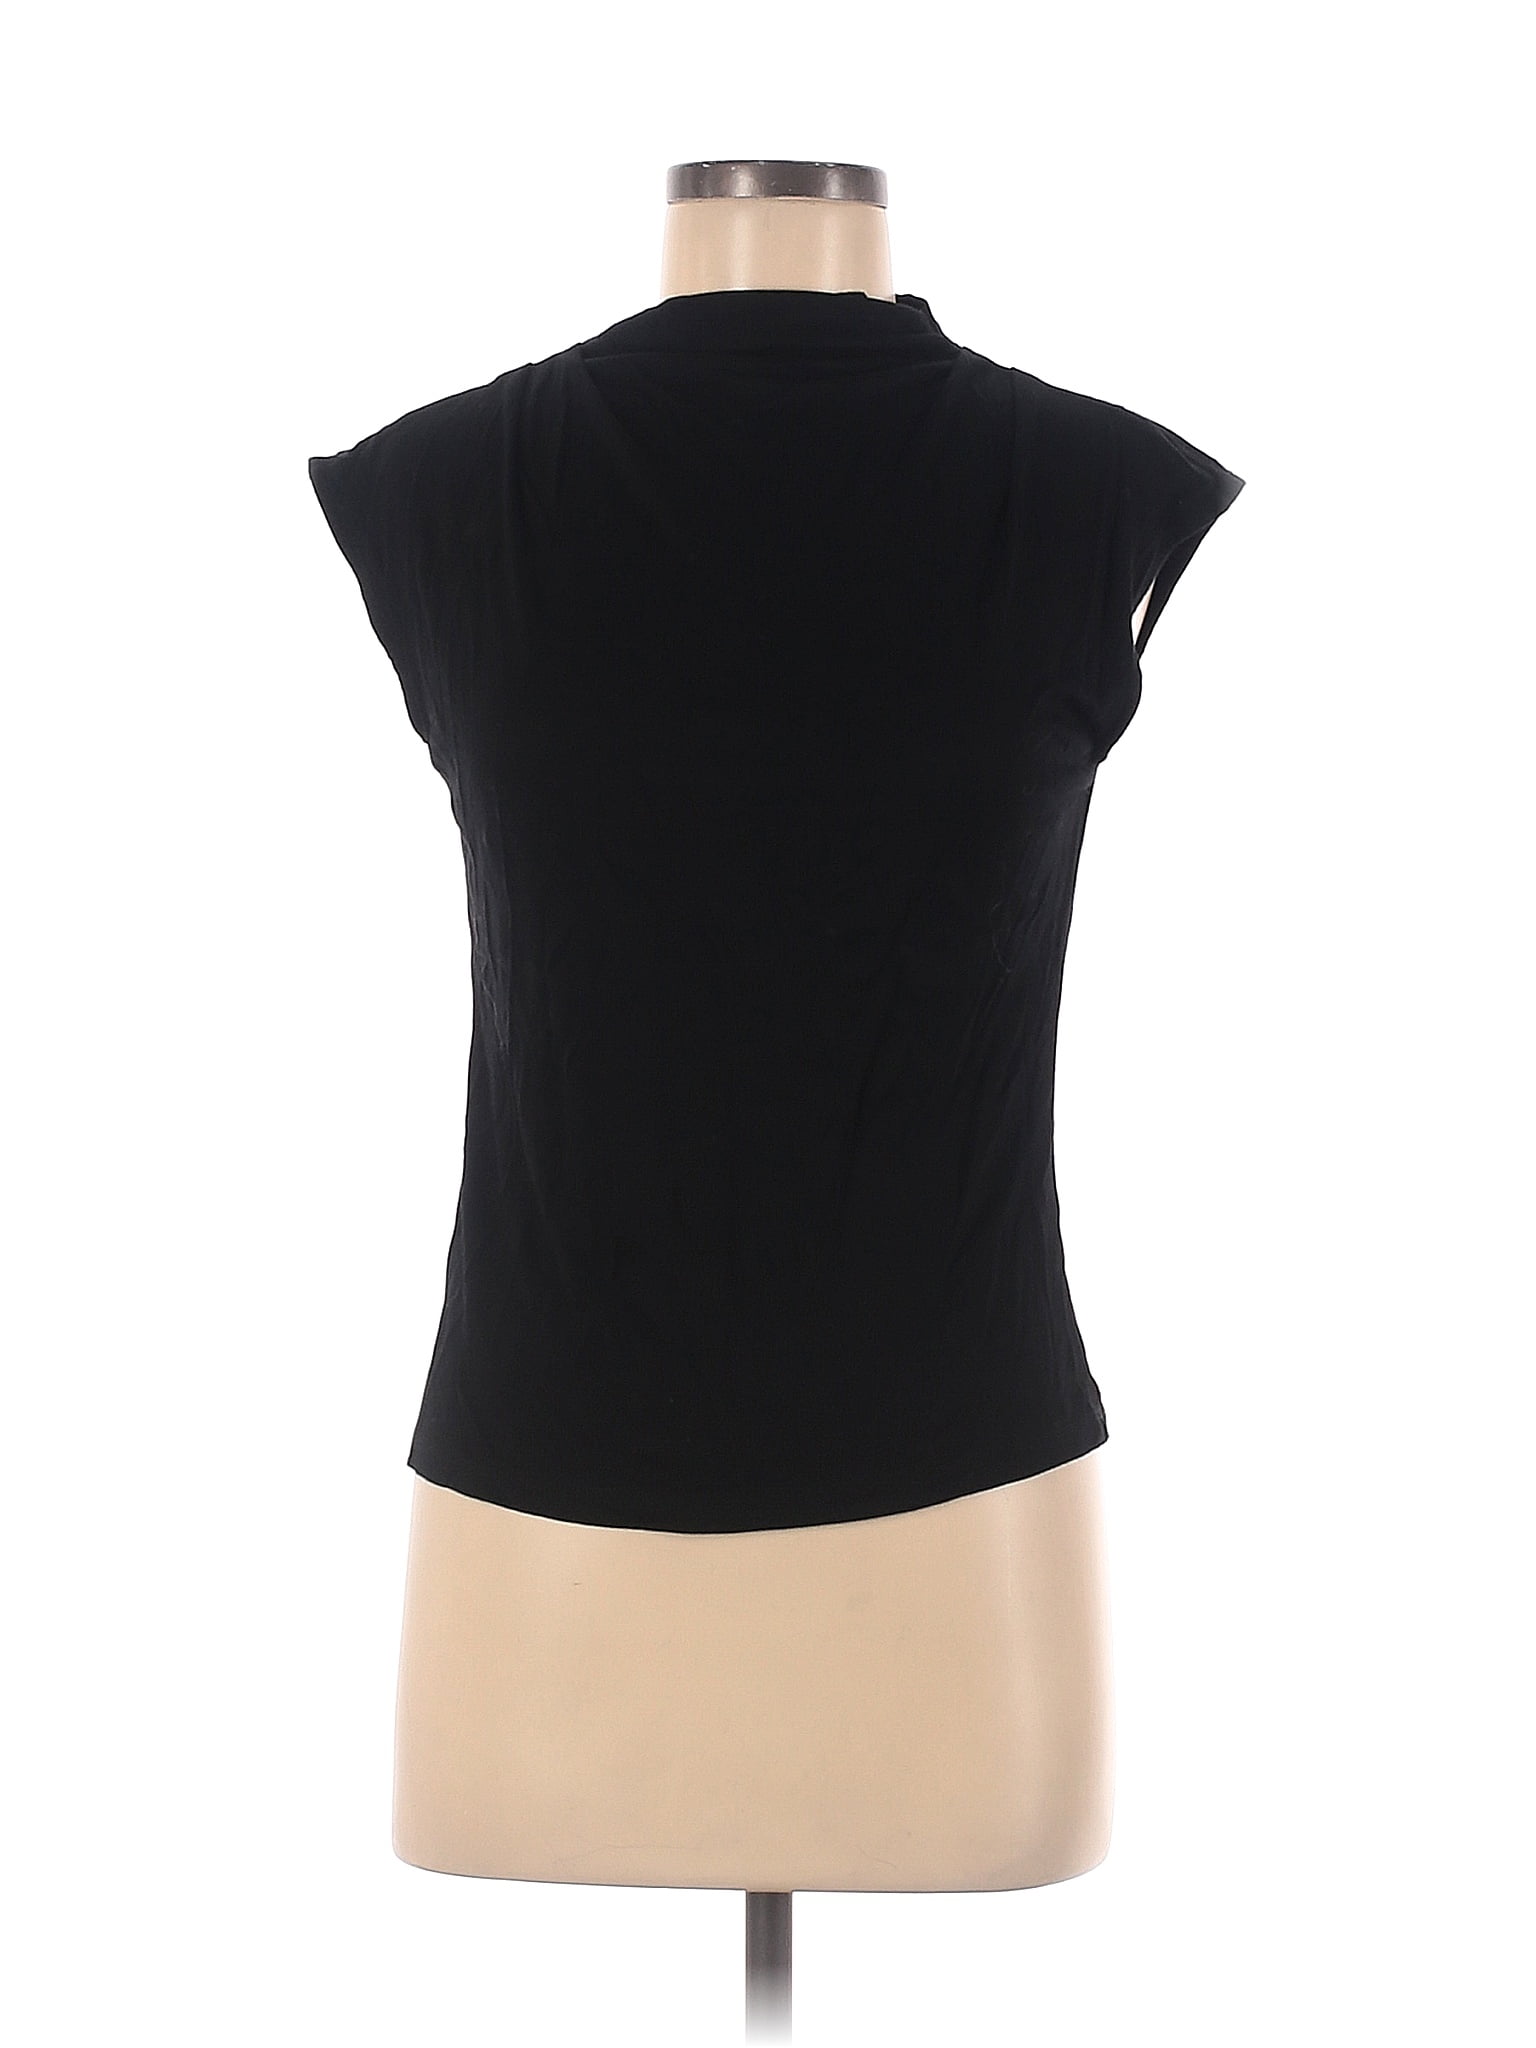 Ann Taylor 100% Rayon Black Sleeveless Top Size M - 75% off | thredUP